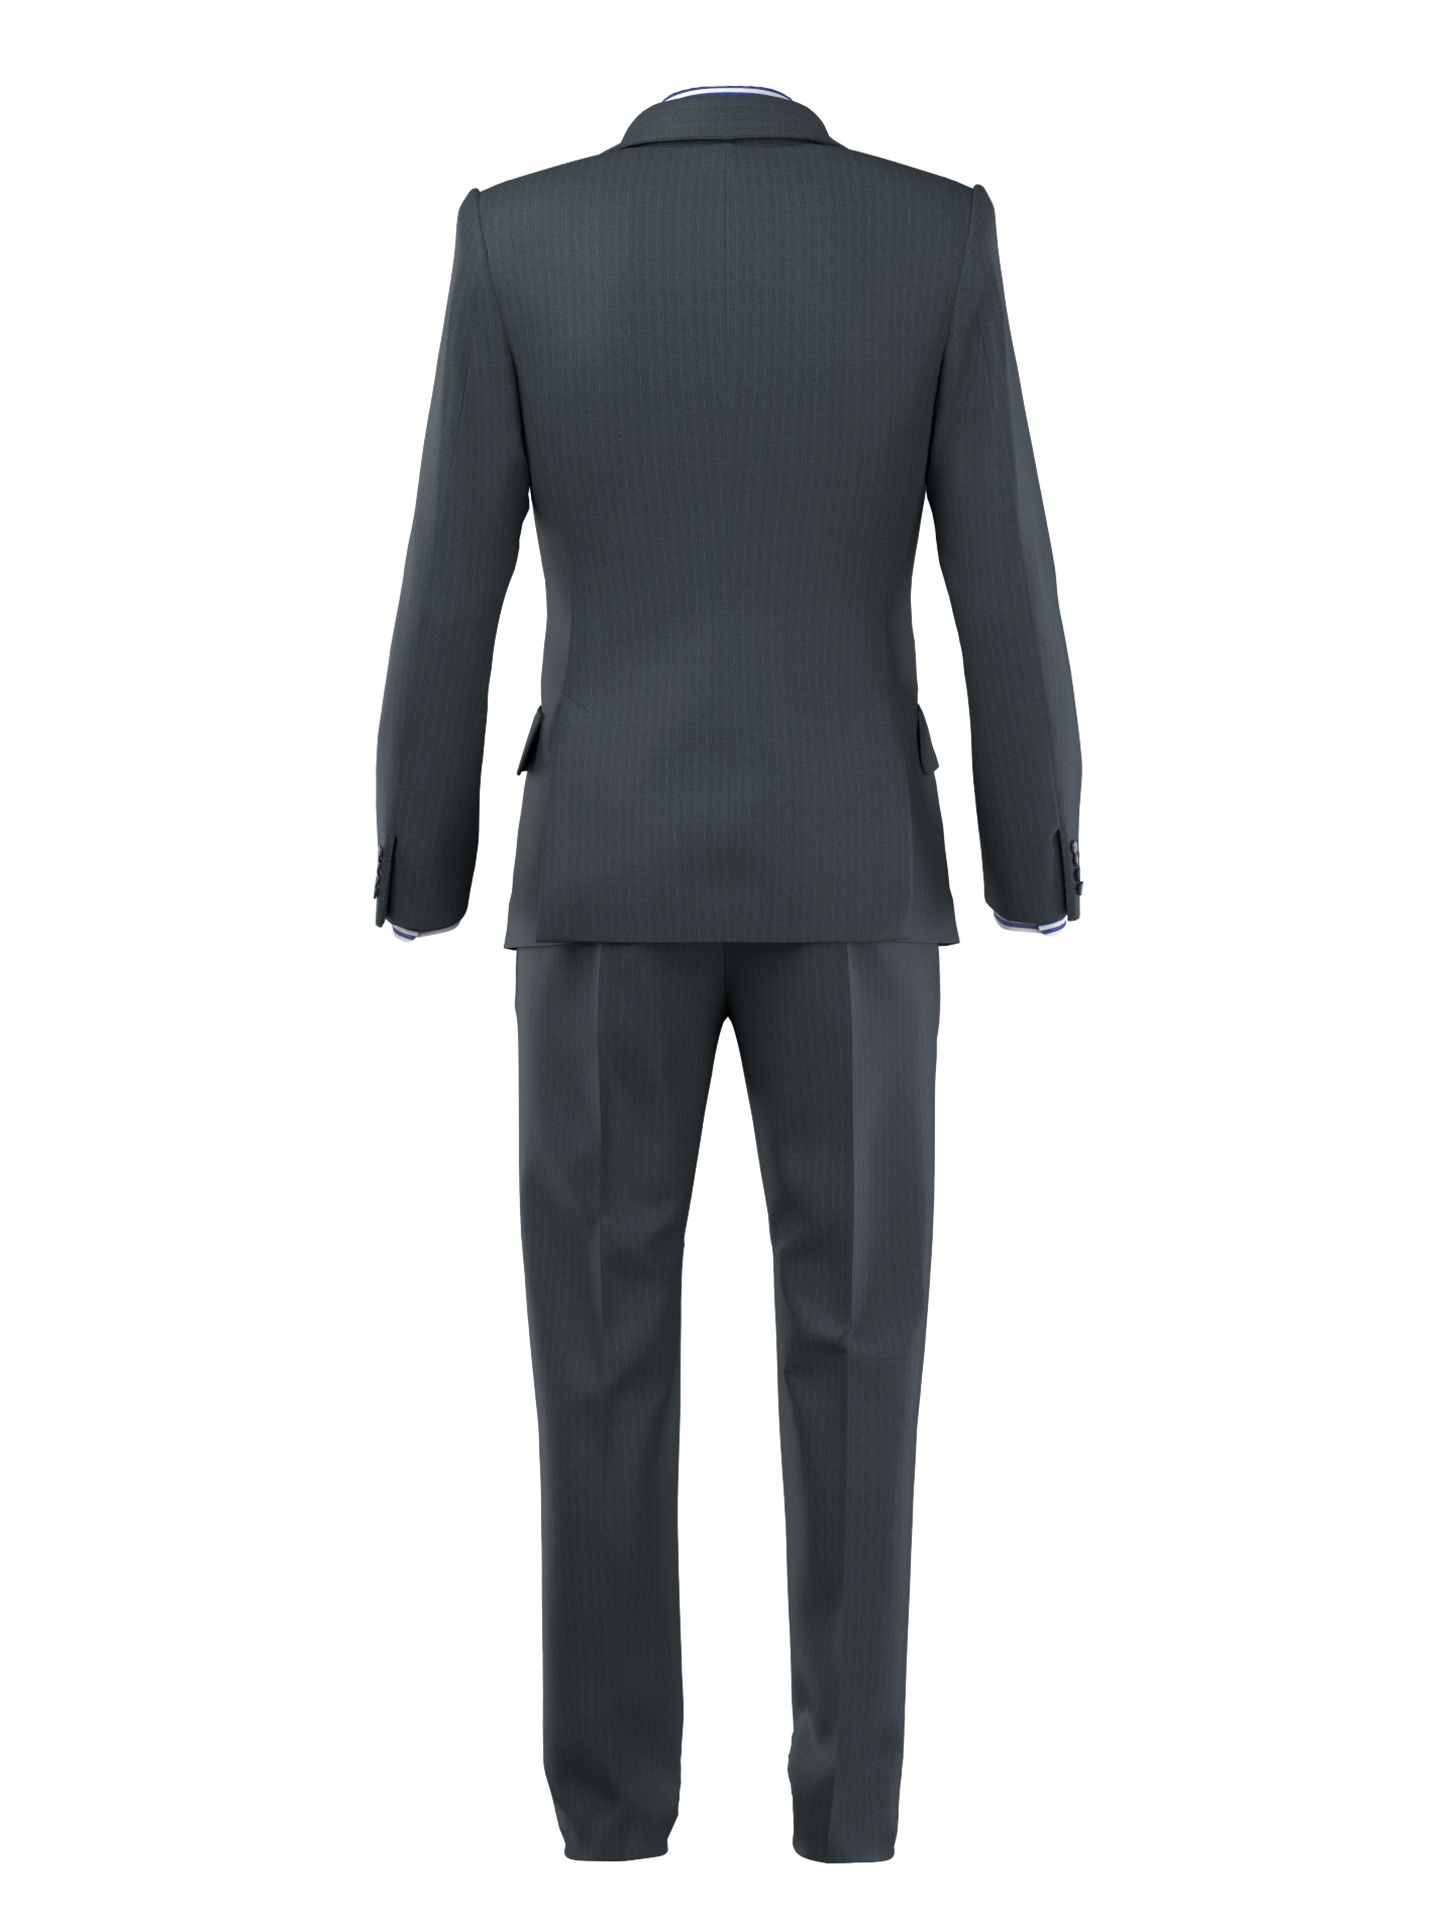 Italian Classic Suit – DRESSX / More Dash Inc. dba DRESSX